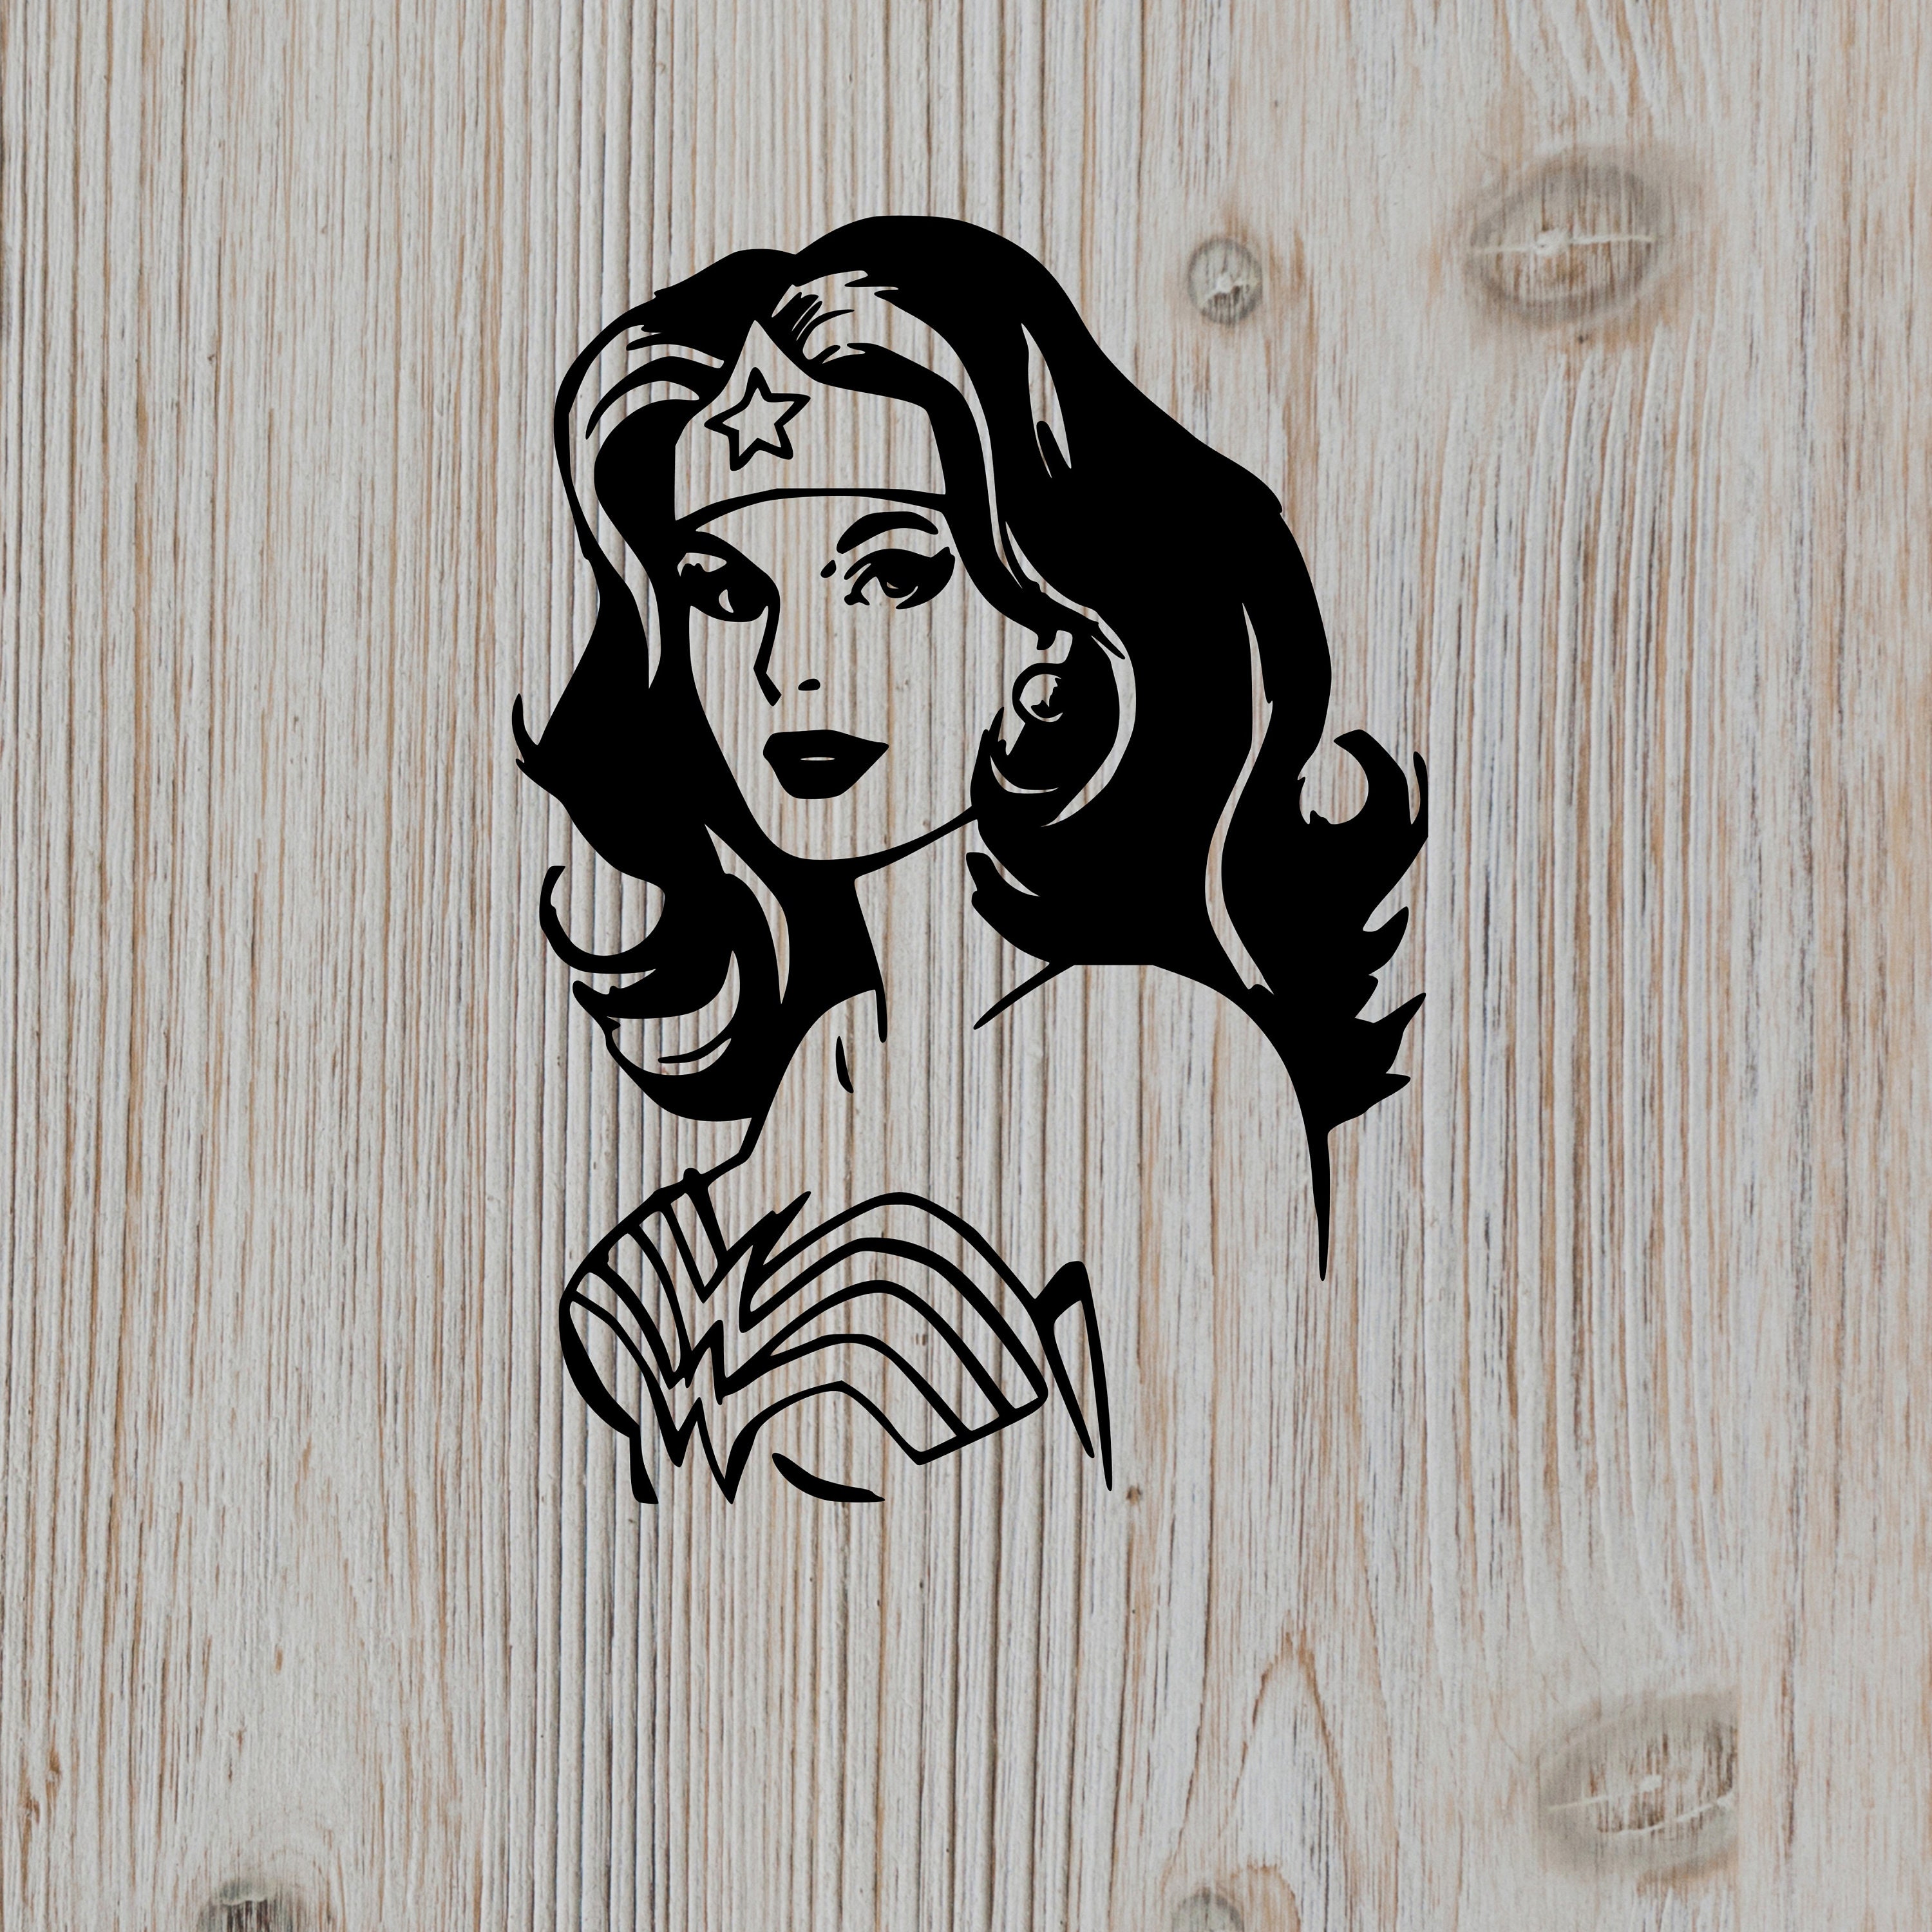 Download 70s Style Wonder Woman Silhouette cut fileWonder Woman svg